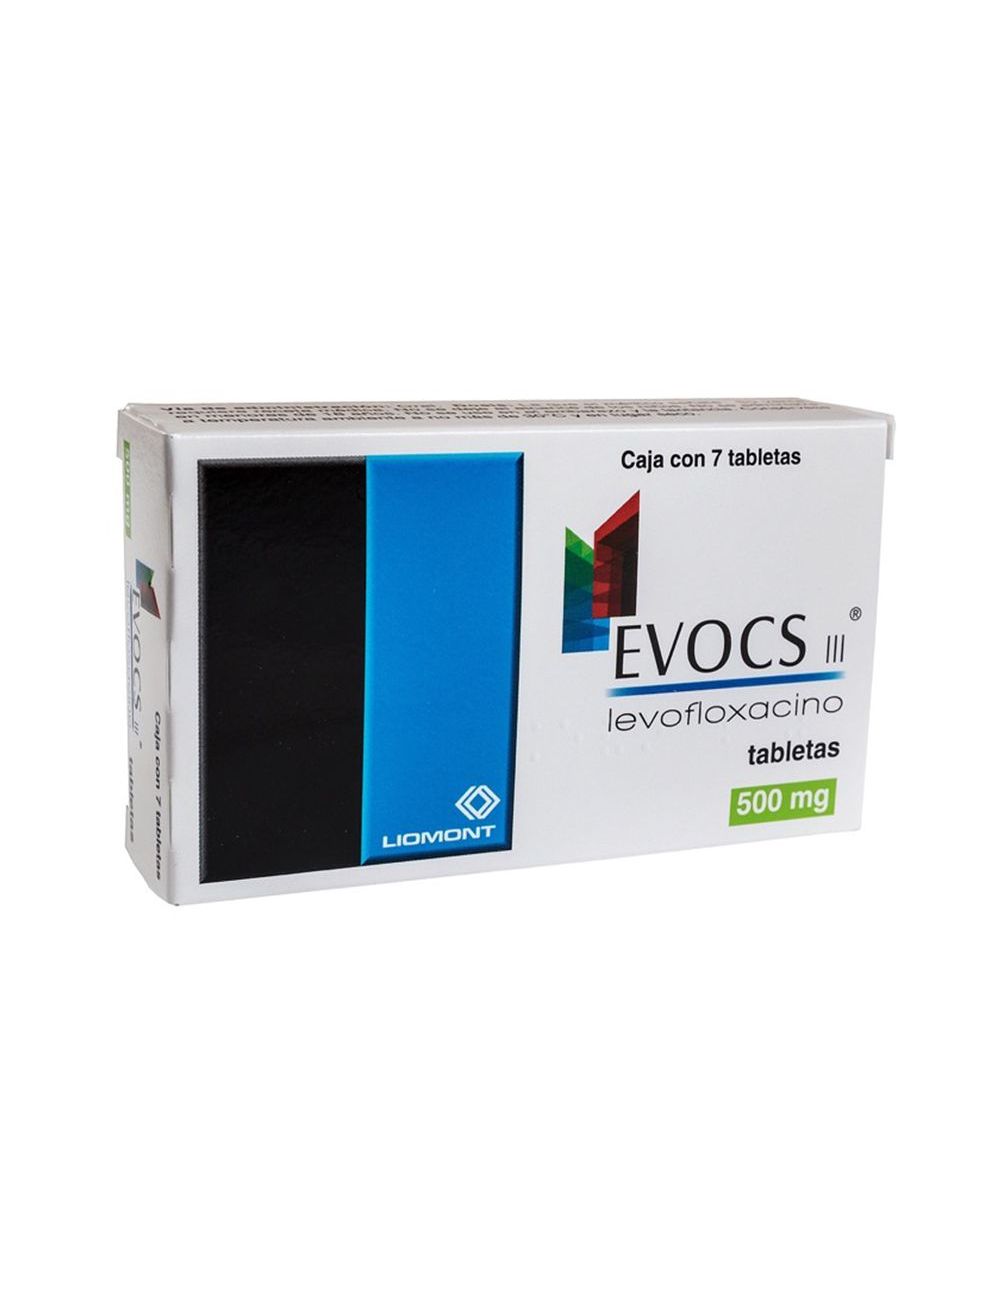 Evocs-III 500 mg Caja Con 7 Tabletas RX2